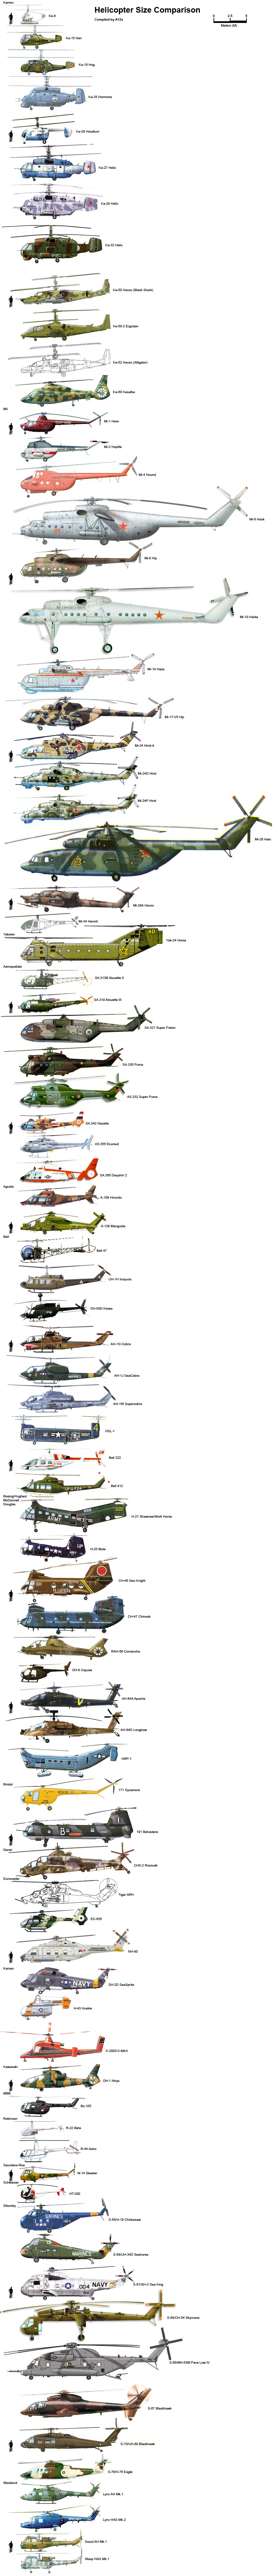 http://www.laboiteverte.fr/wp-content/uploads/2014/10/comparaison-taille-helicoptere.jpg